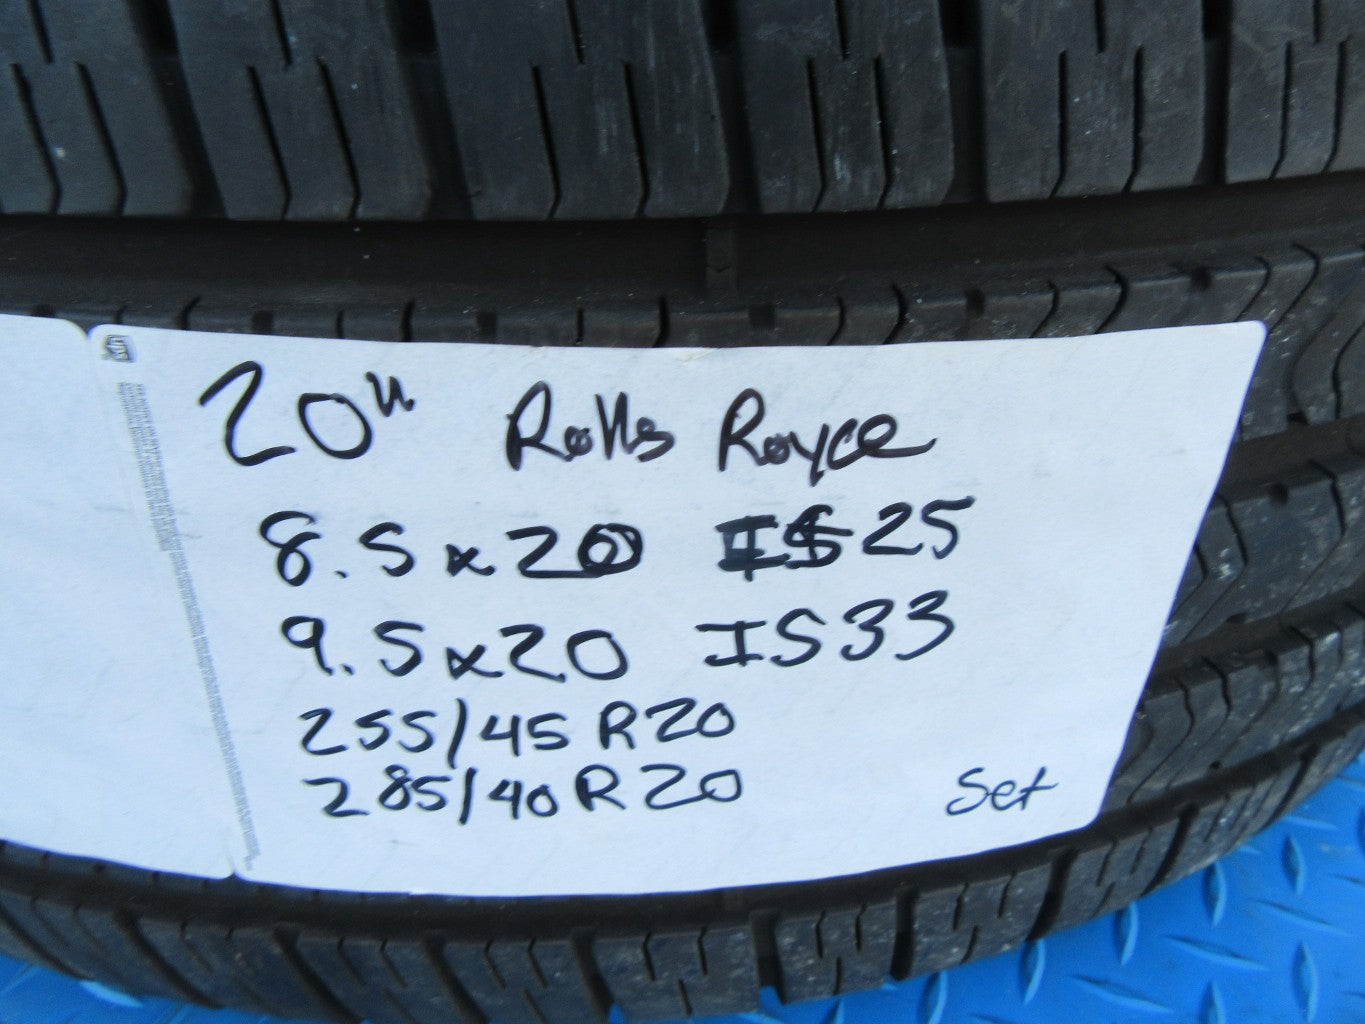 20" Rolls Royce Ghost Wraith Dawn chrome wheels rims tires